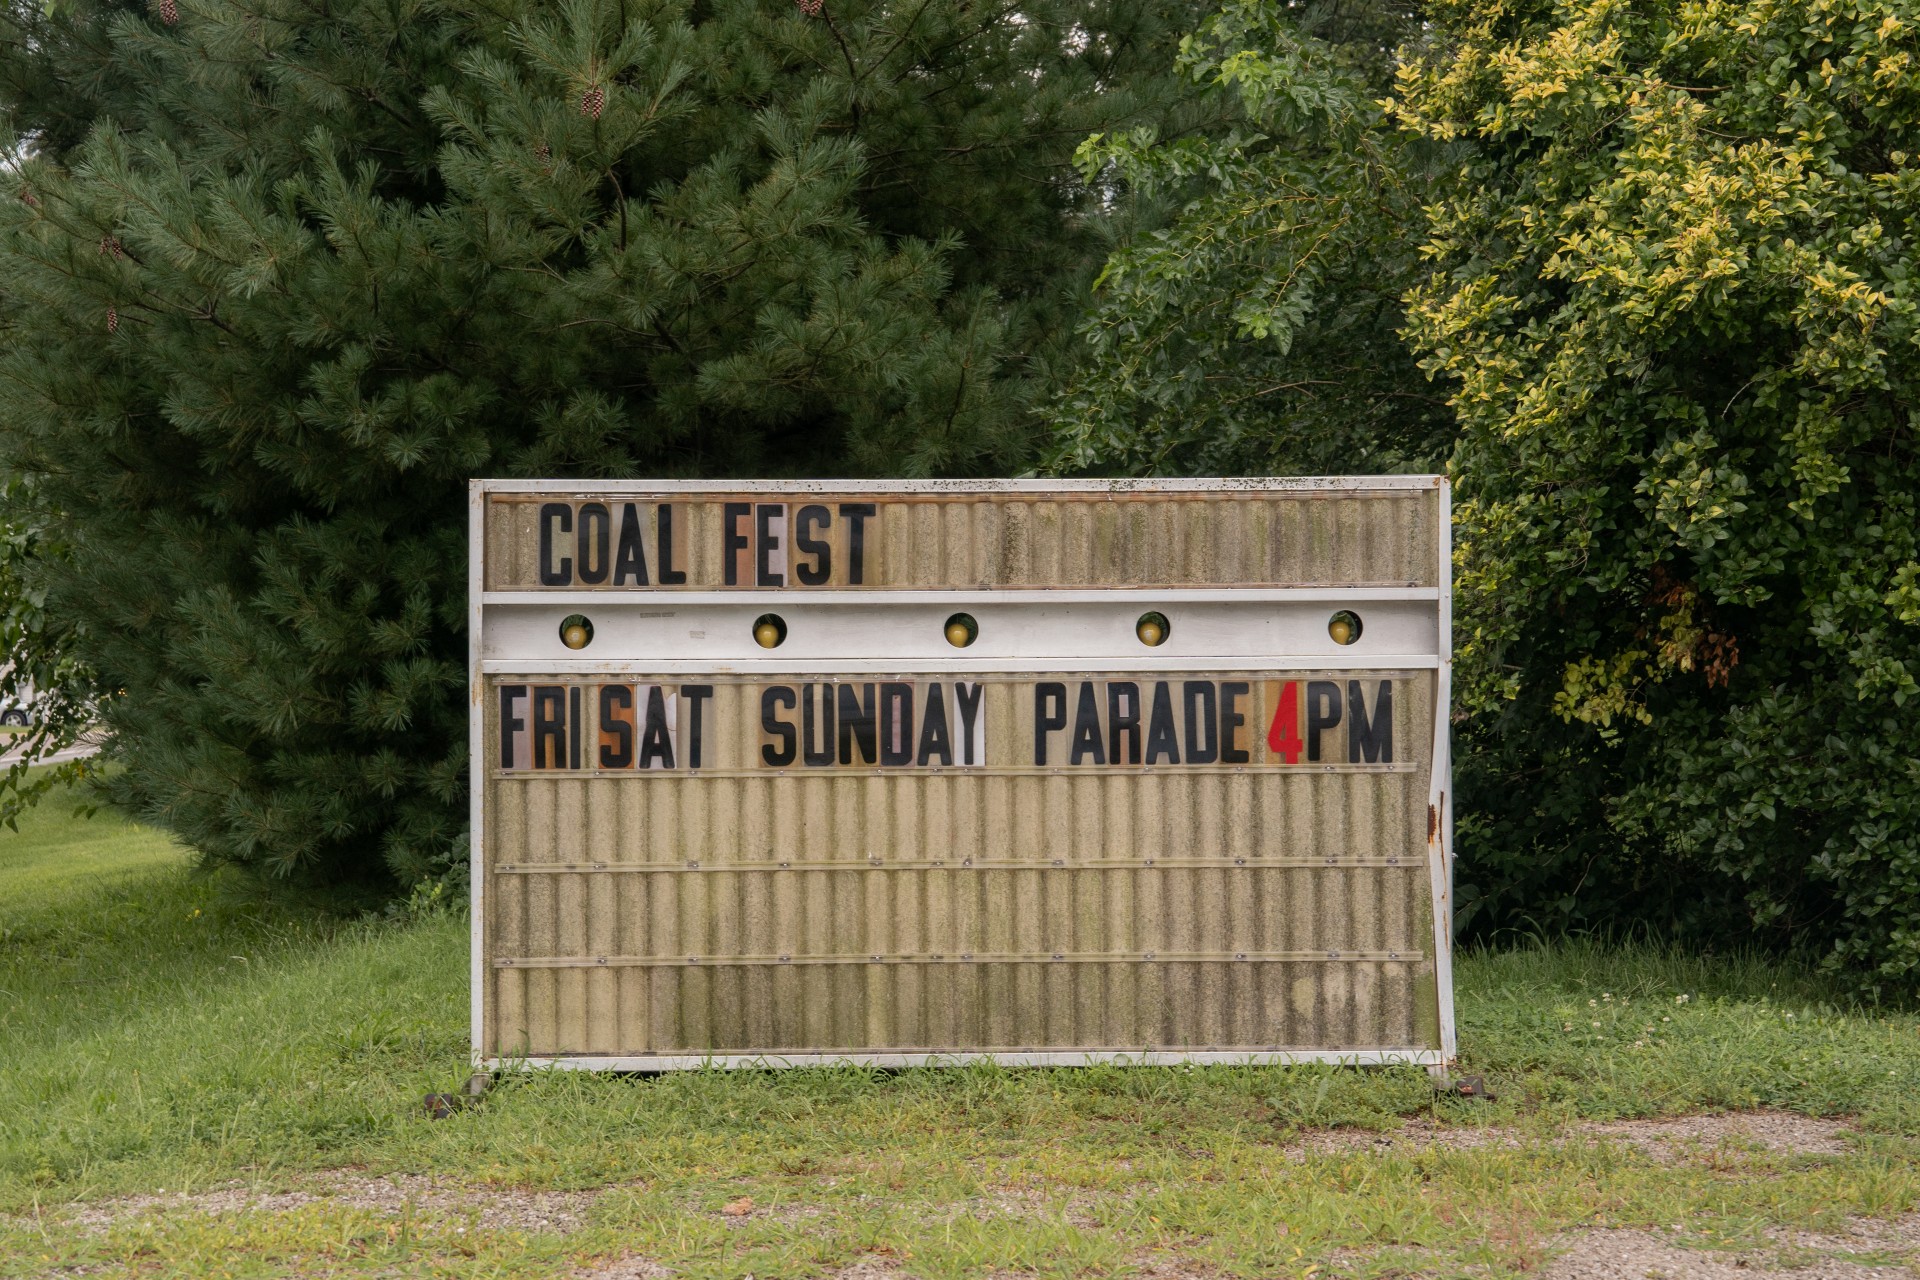 A sign reads: Coal Fest. Fri Sat Sunday Parade 4pm